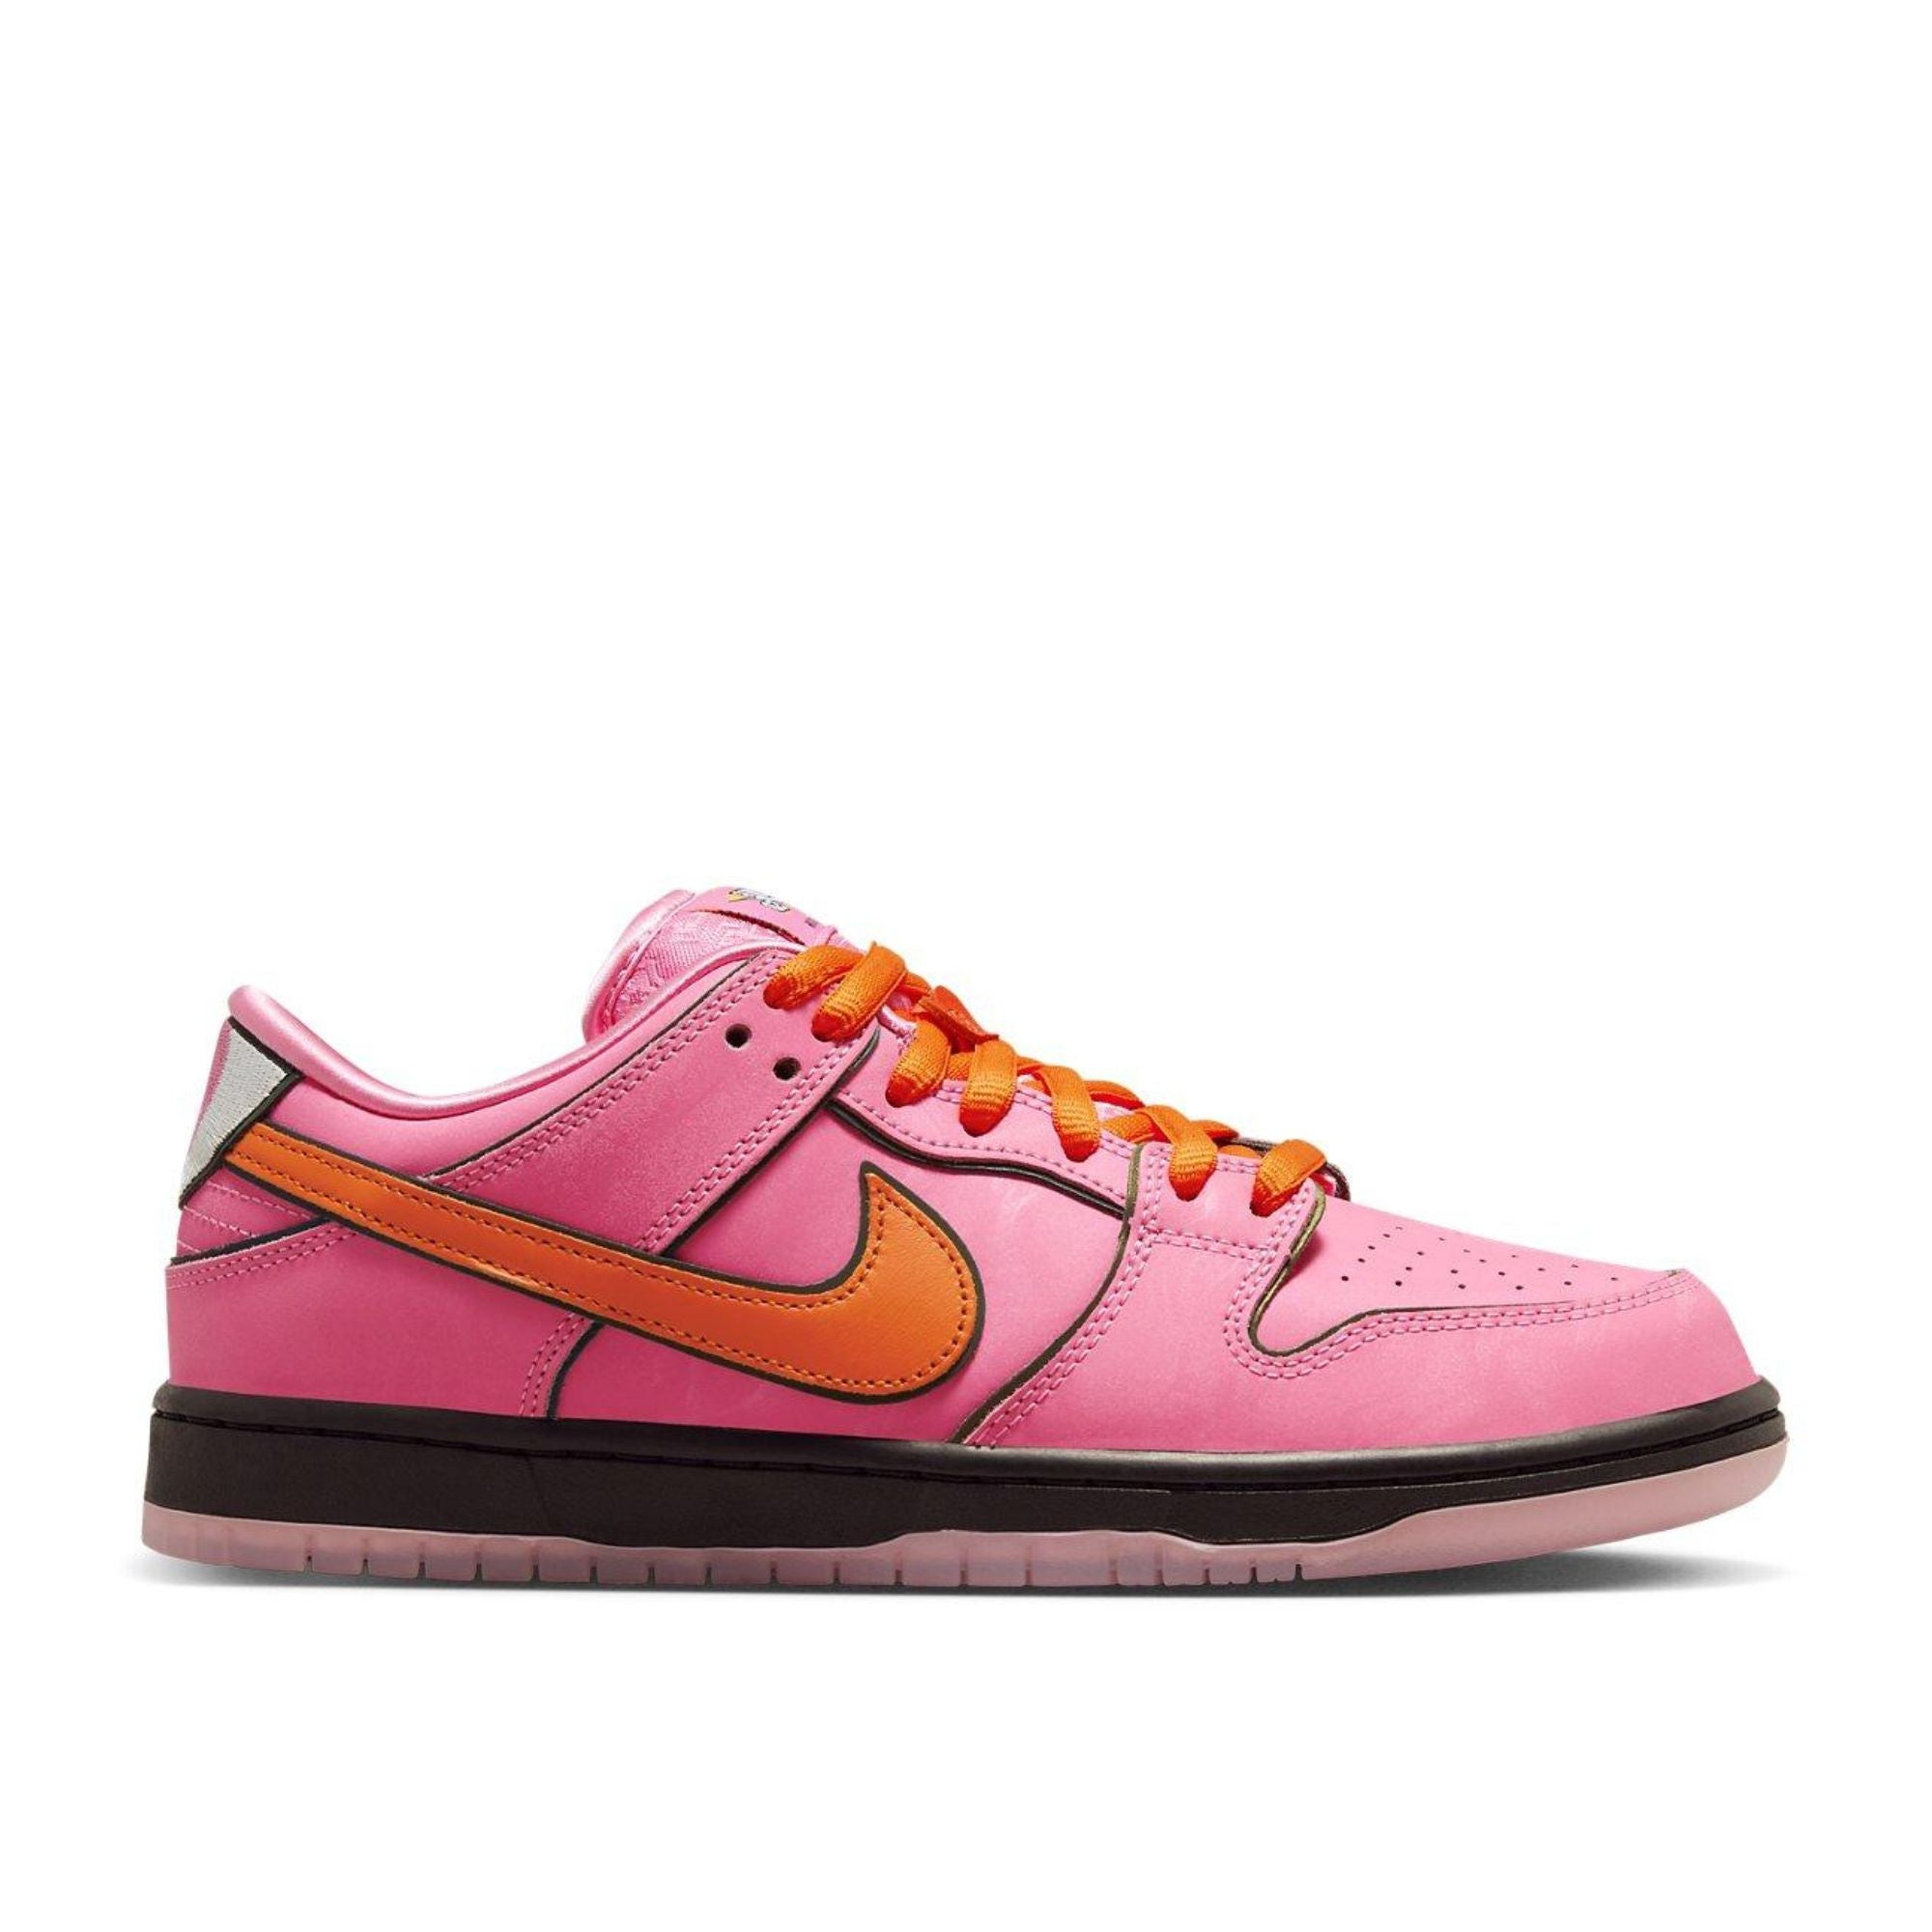 Nike Sb Dunk Low Qs The Powerpuff Girls ’Blossom’ Sneakers